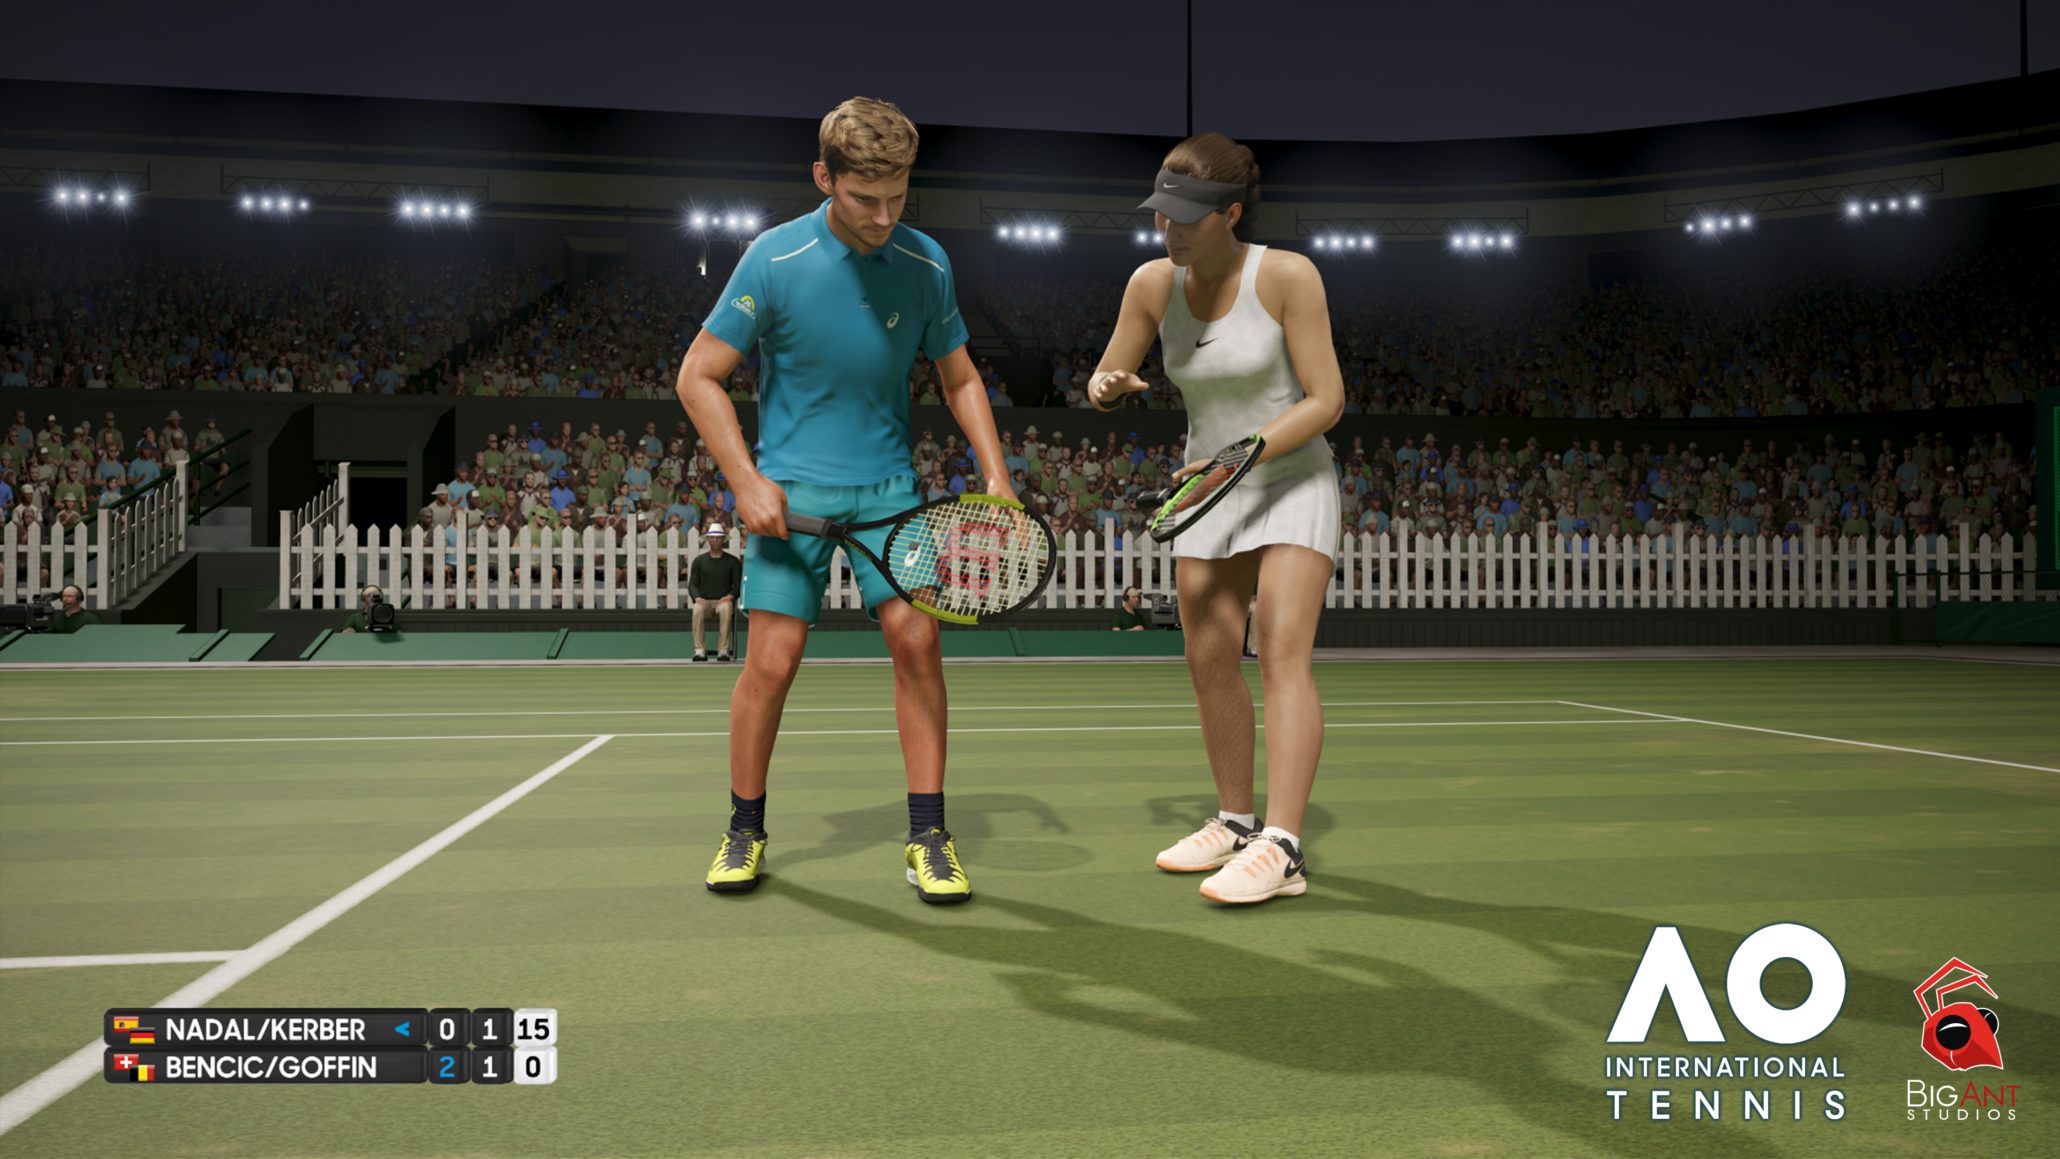 REVIEW – AO International Tennis Xbox One